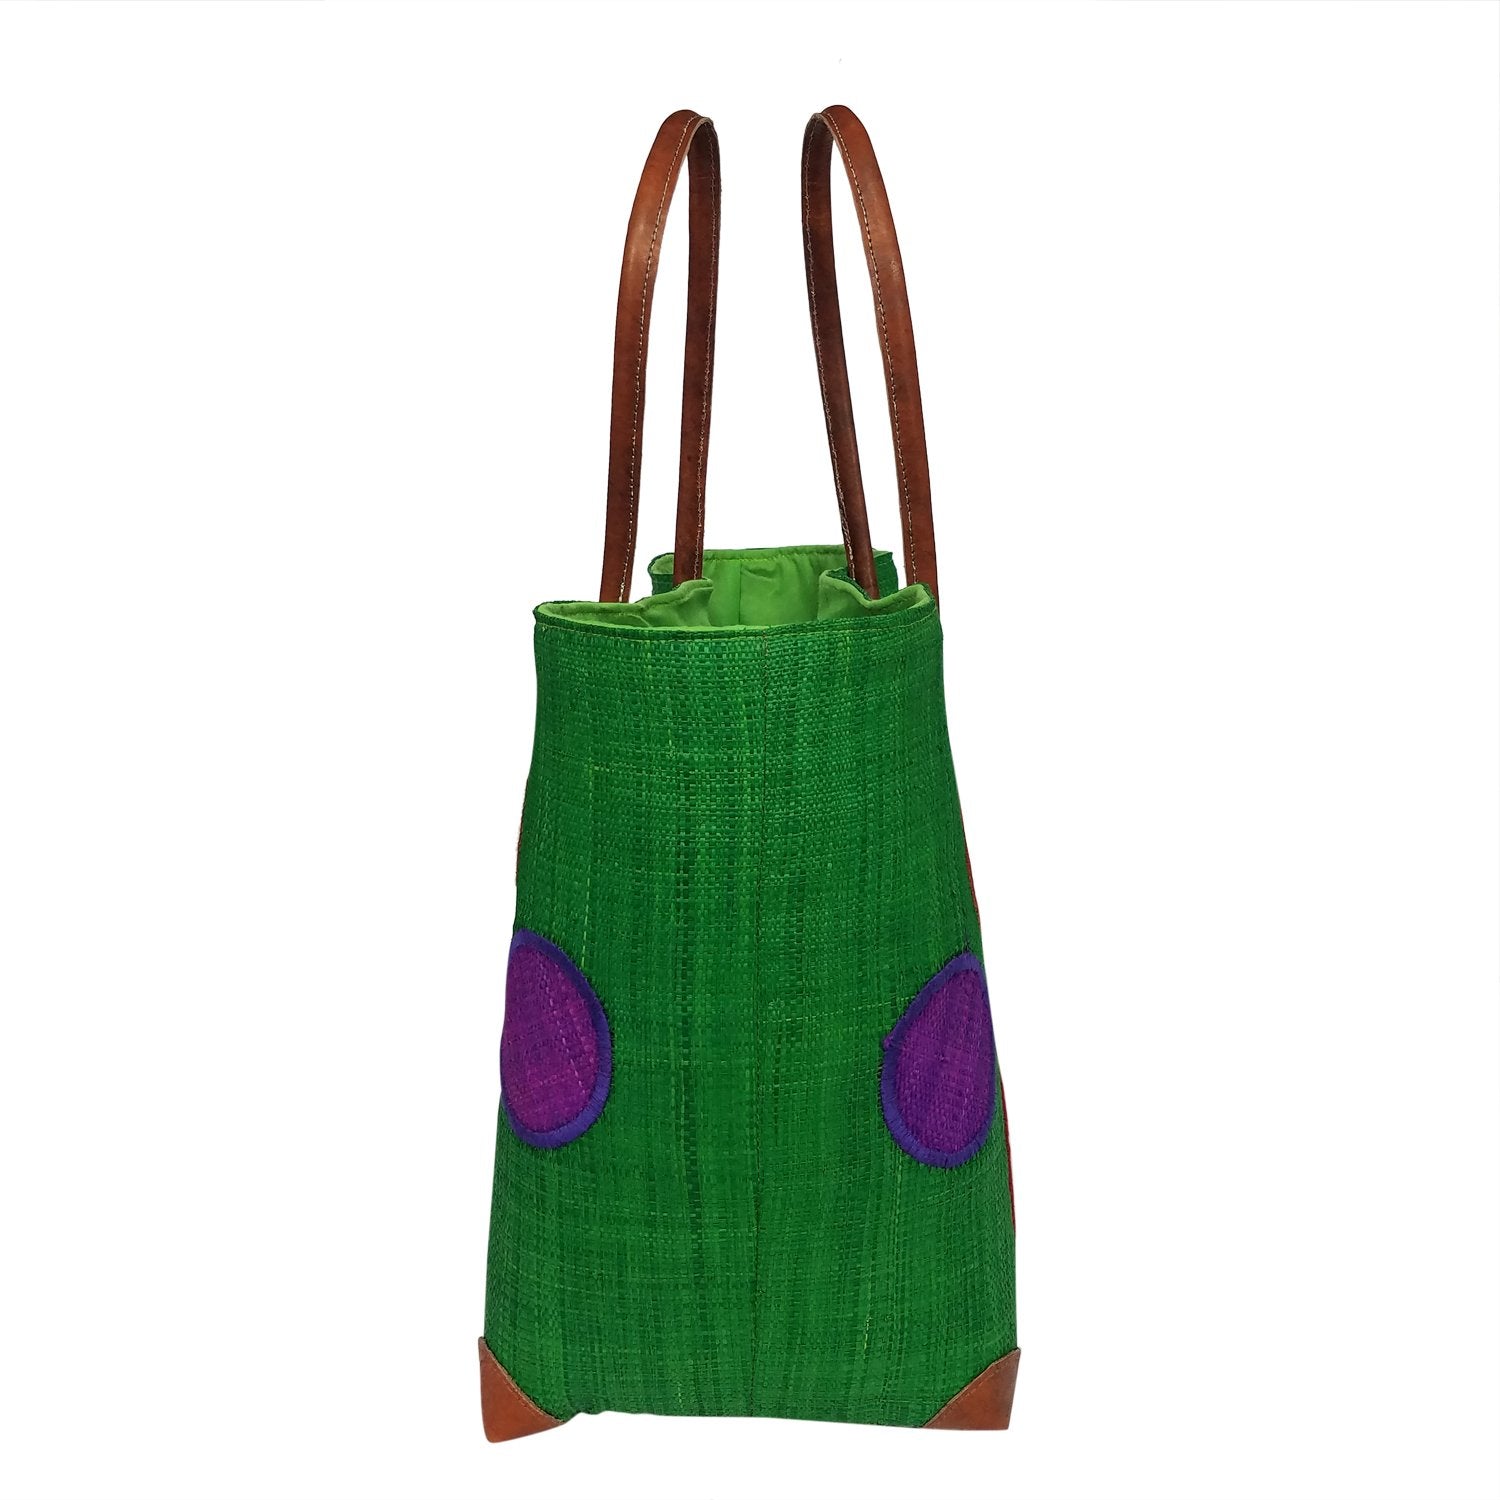 2 of 3: Jena: Authentic Hand Woven Madagascar Green Polka Dot Raffia Tote Bag